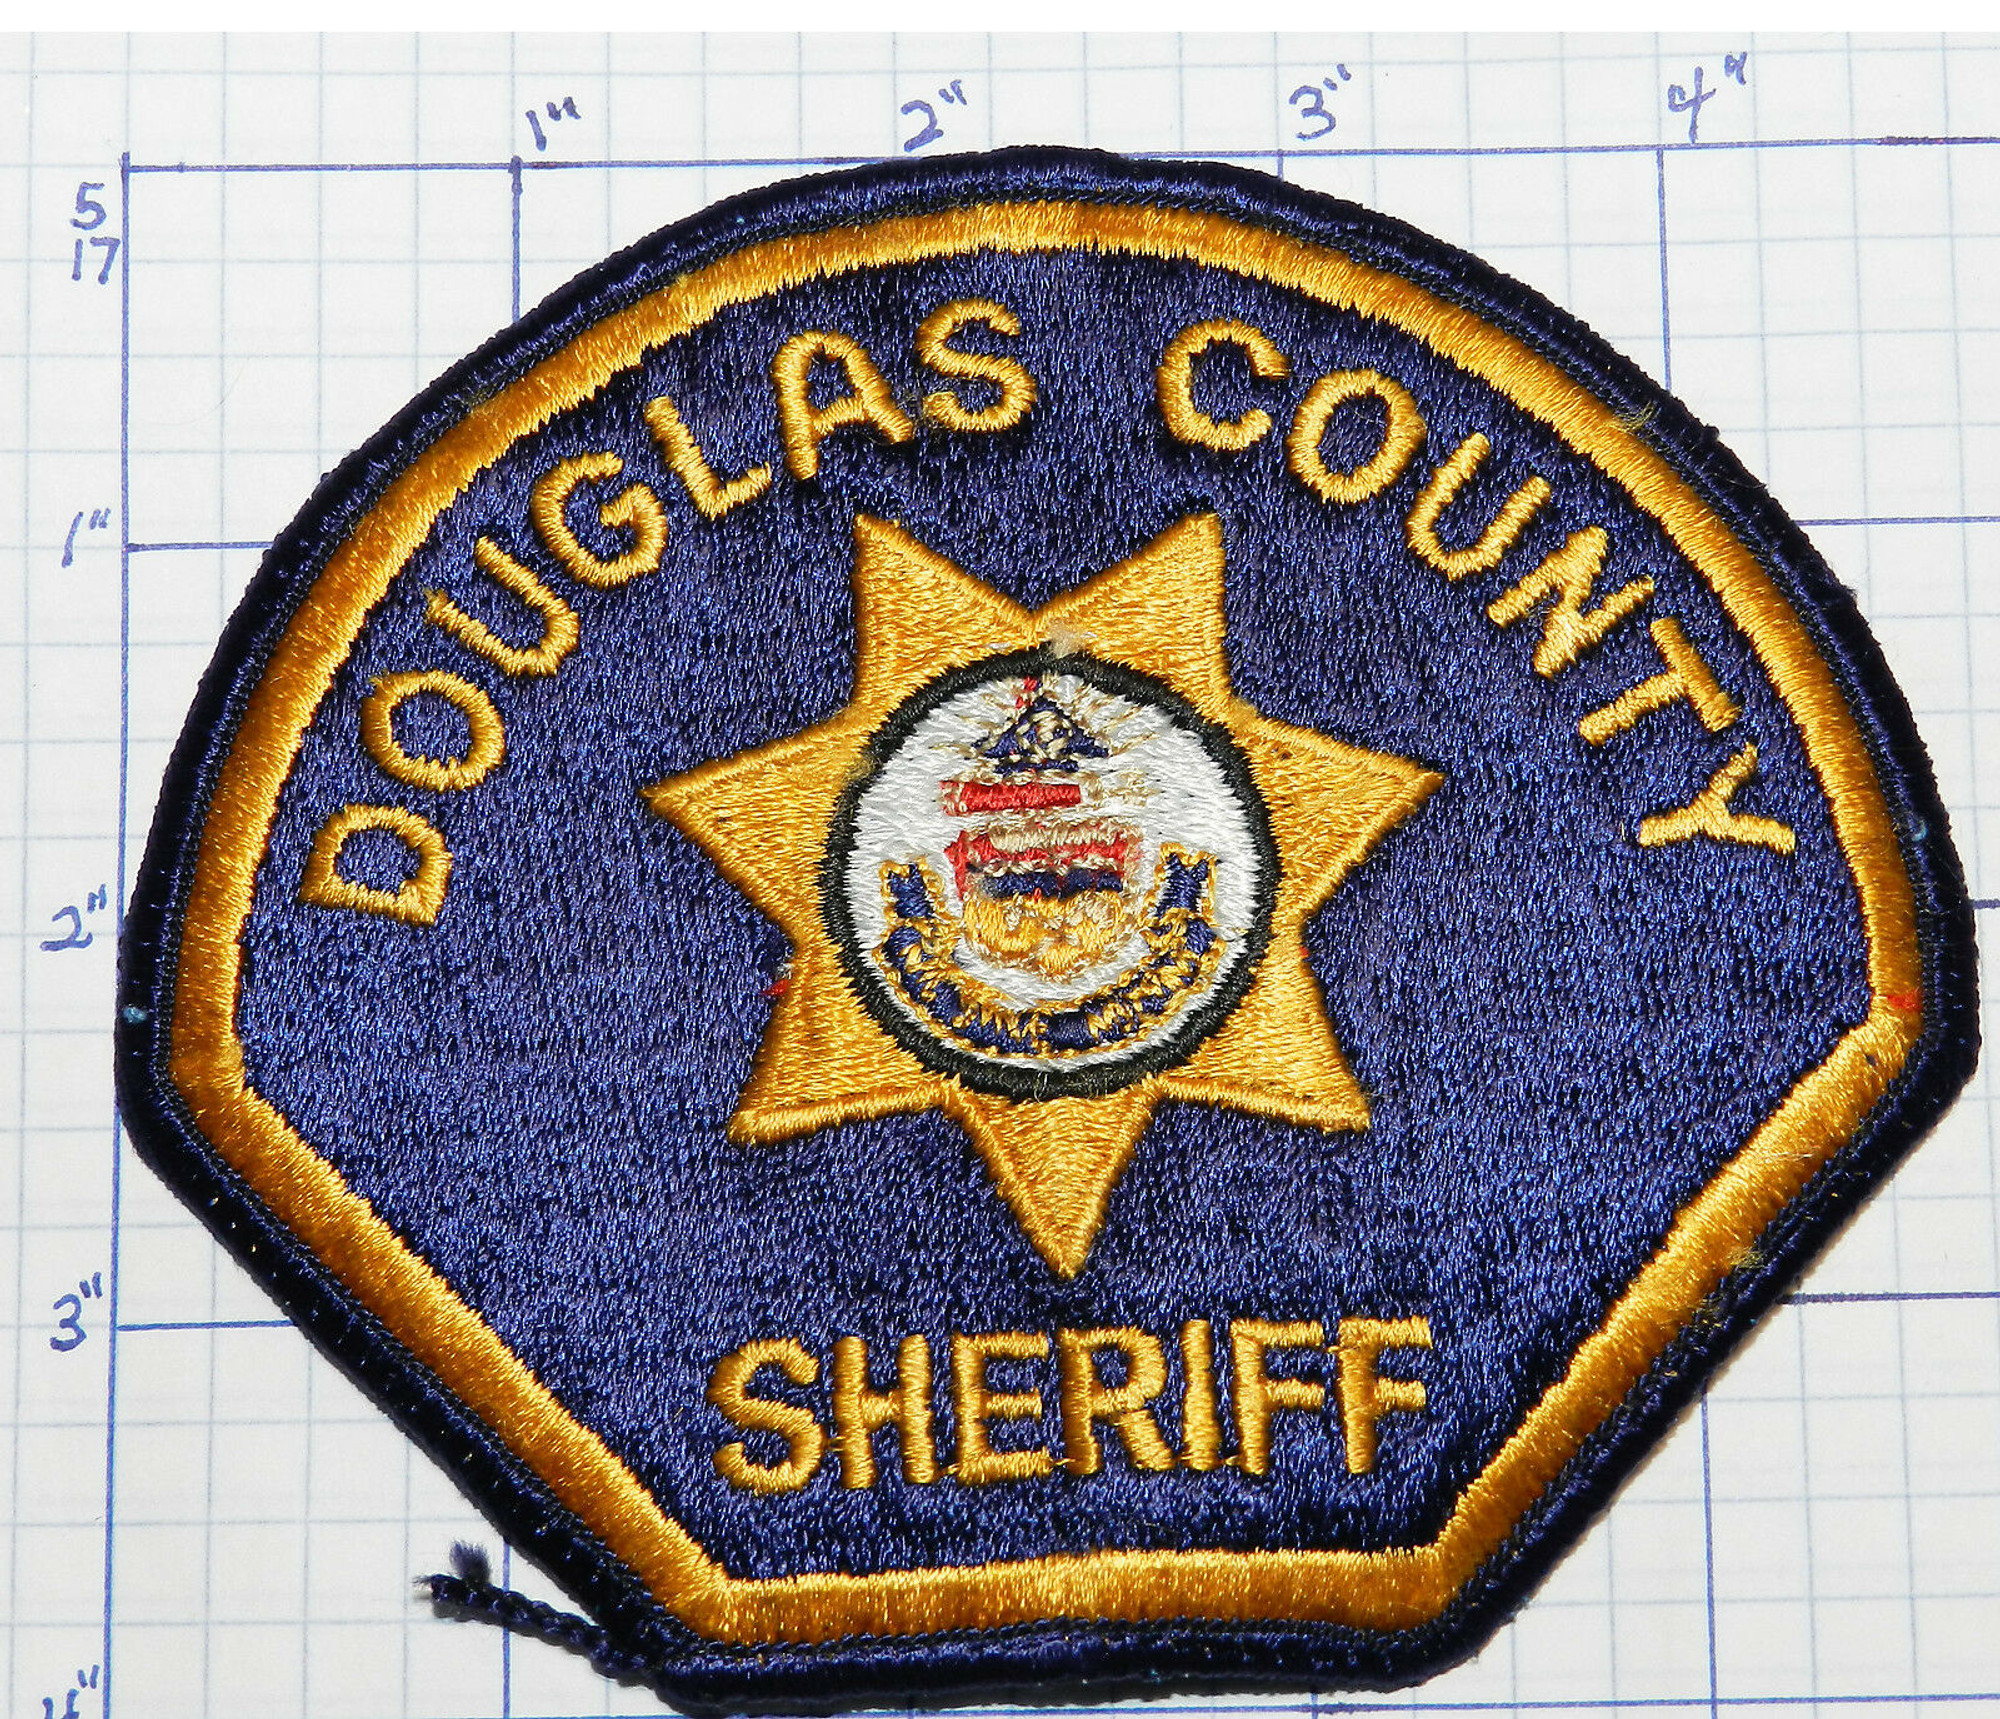 Douglas County CO Sheriff Police Patch